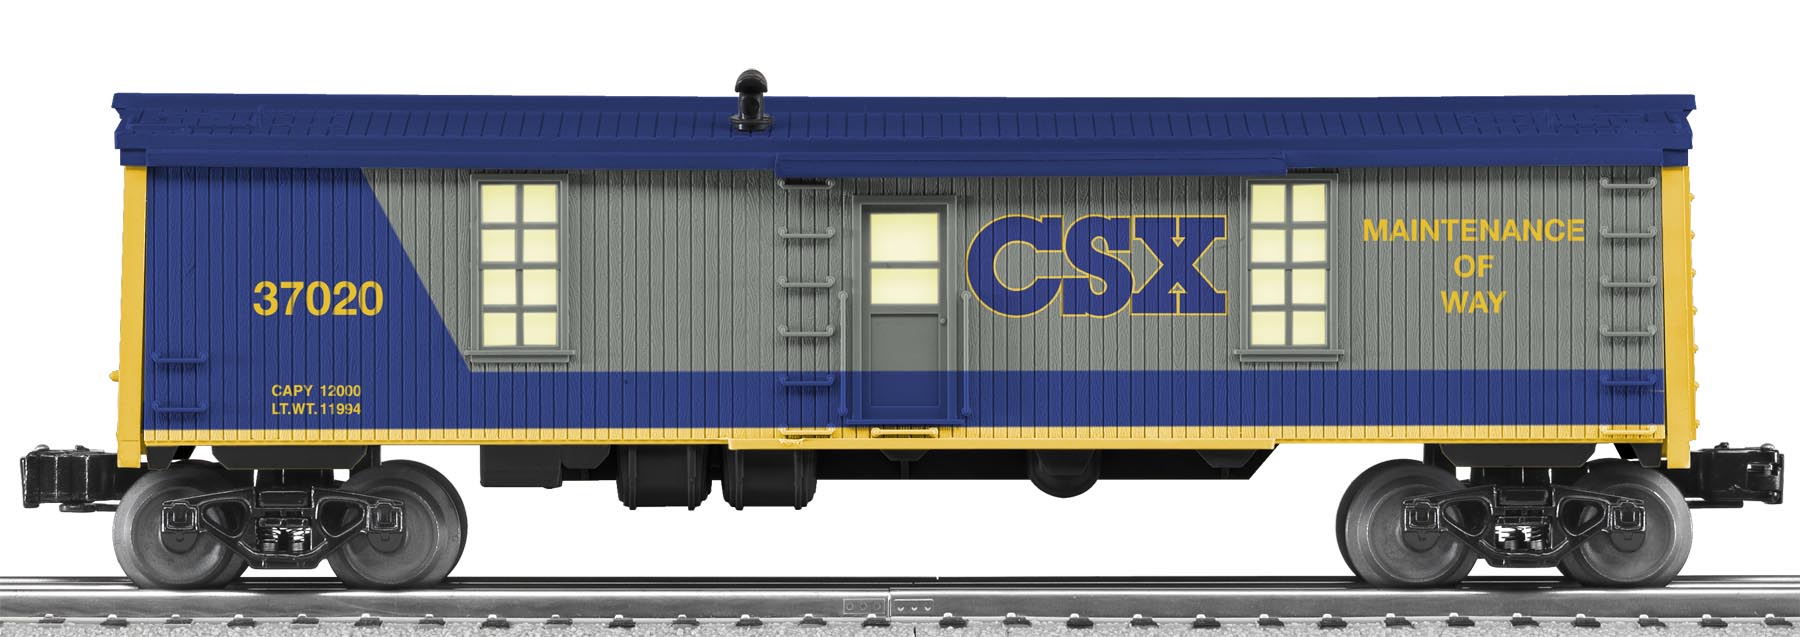 CSX Tool Car (lighted) image